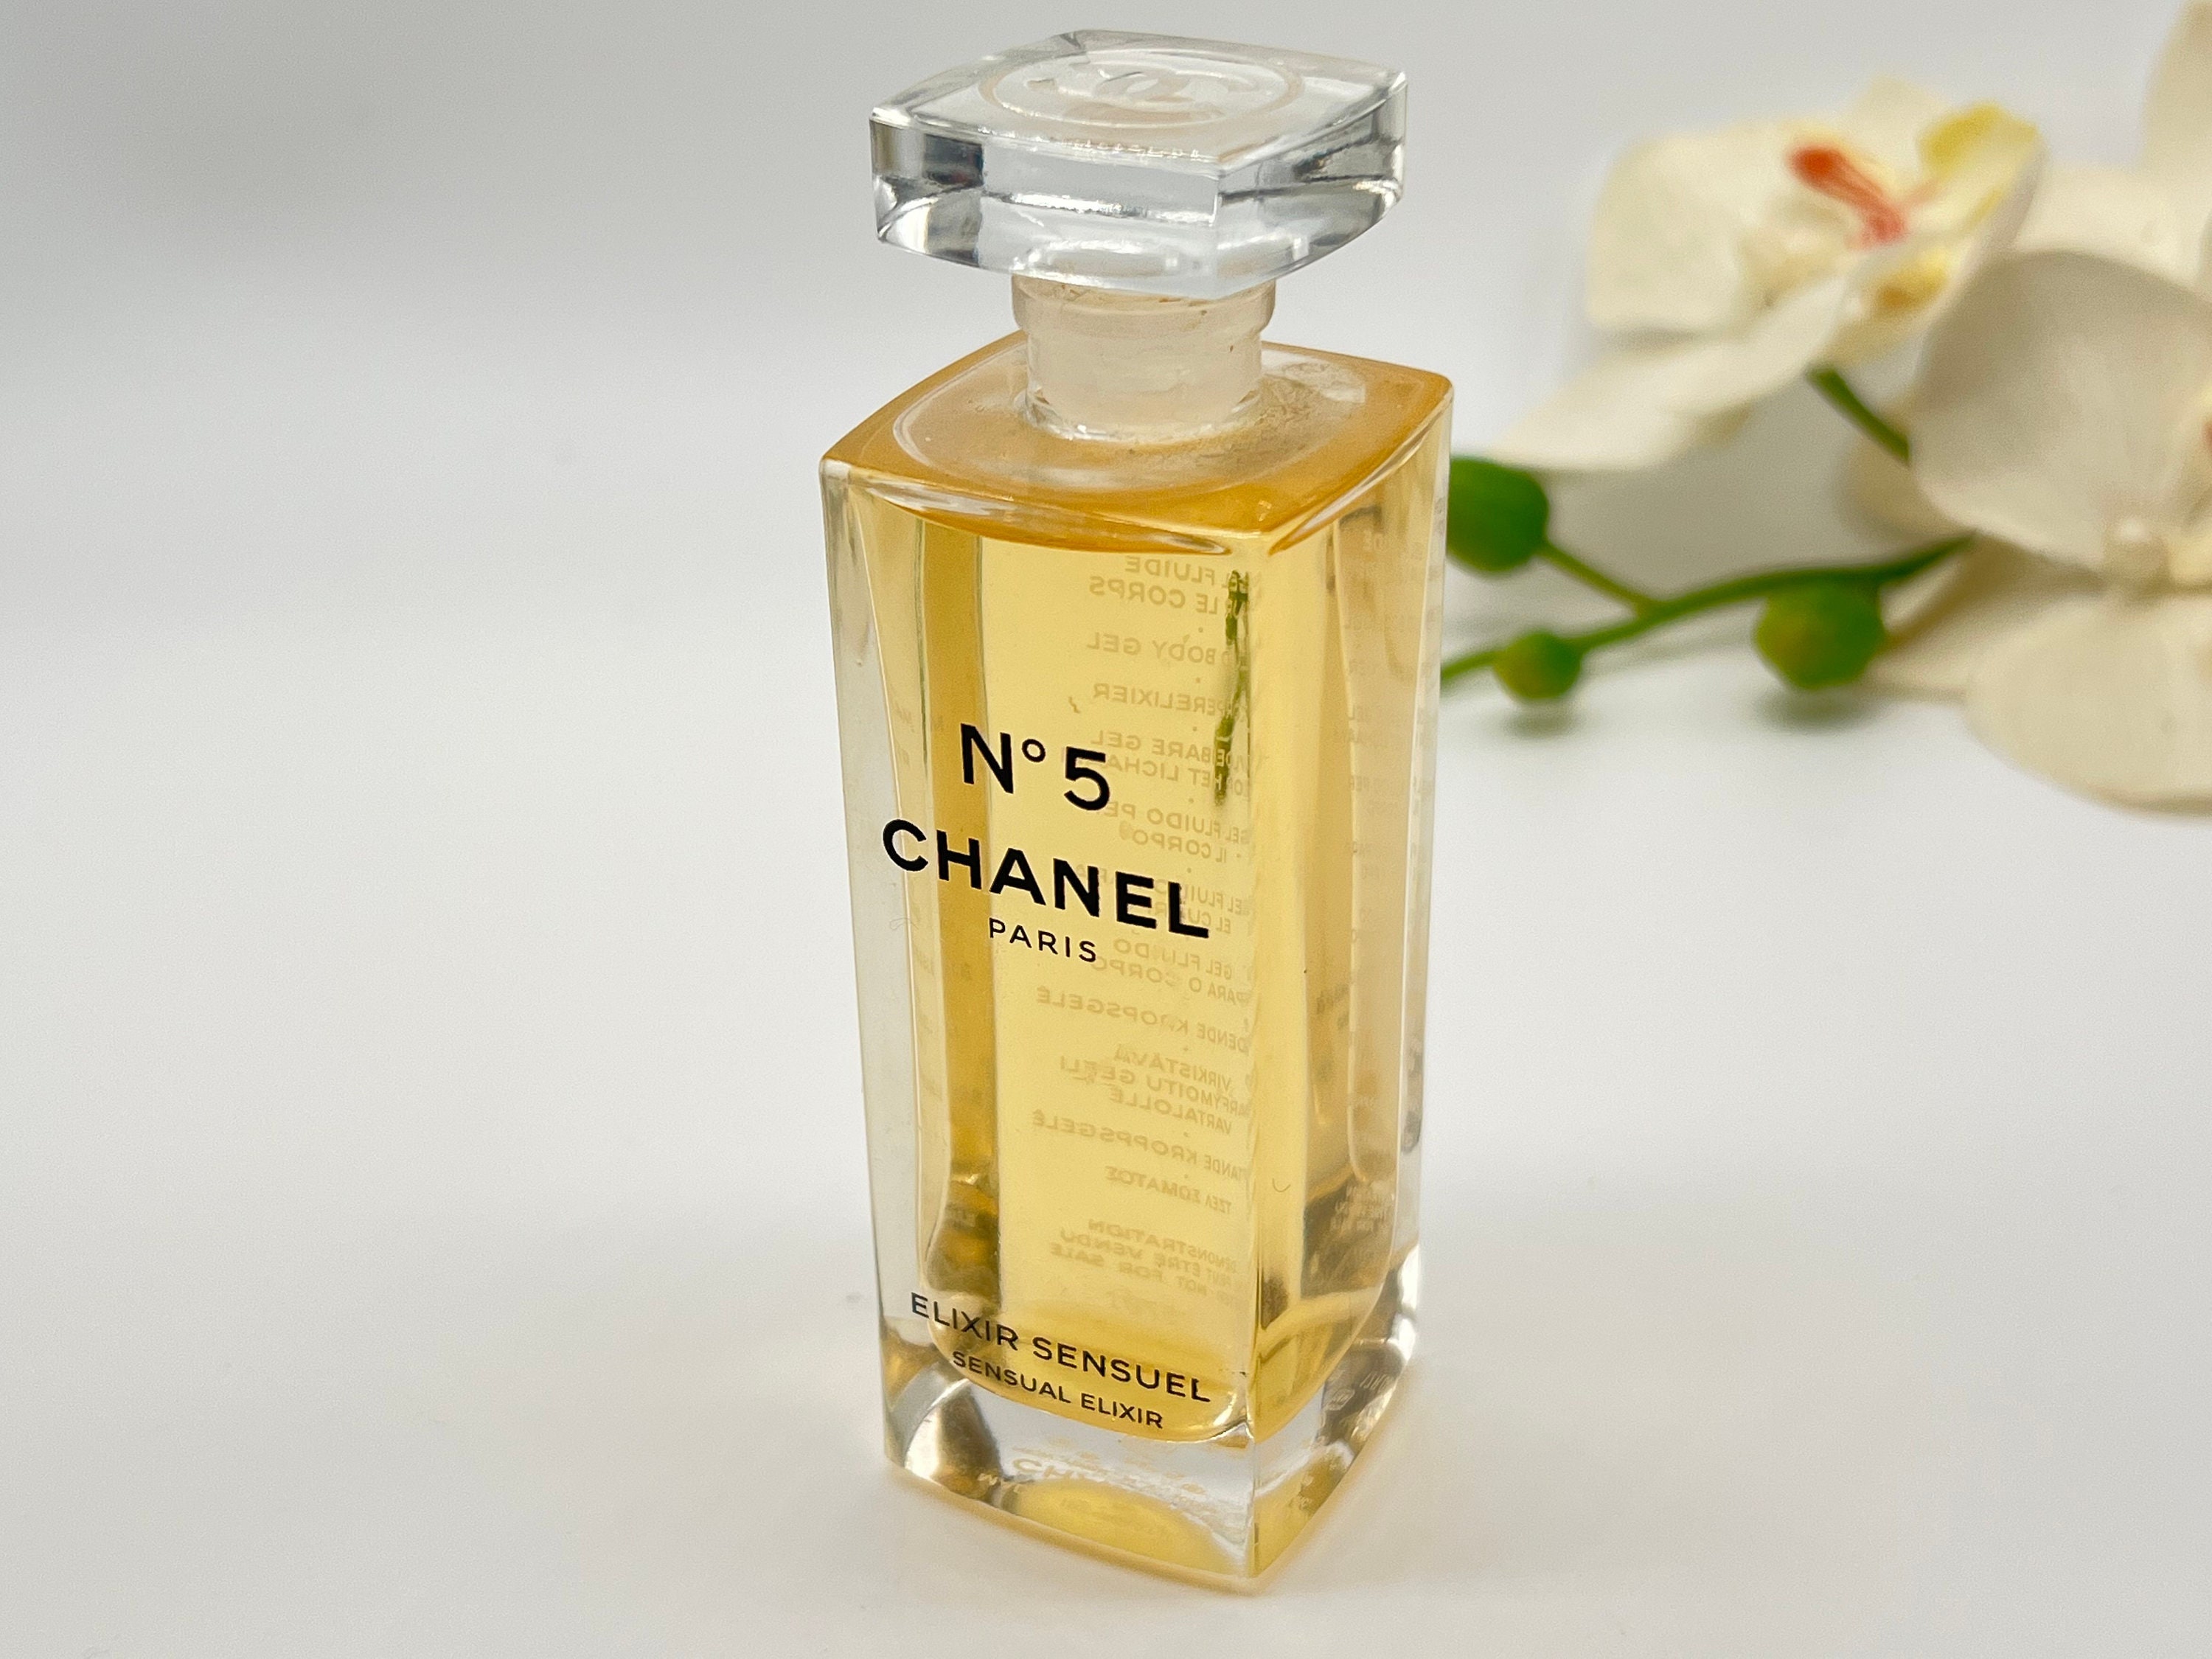 Chanel No. 5 Paris Elixir Sensuel 50ml